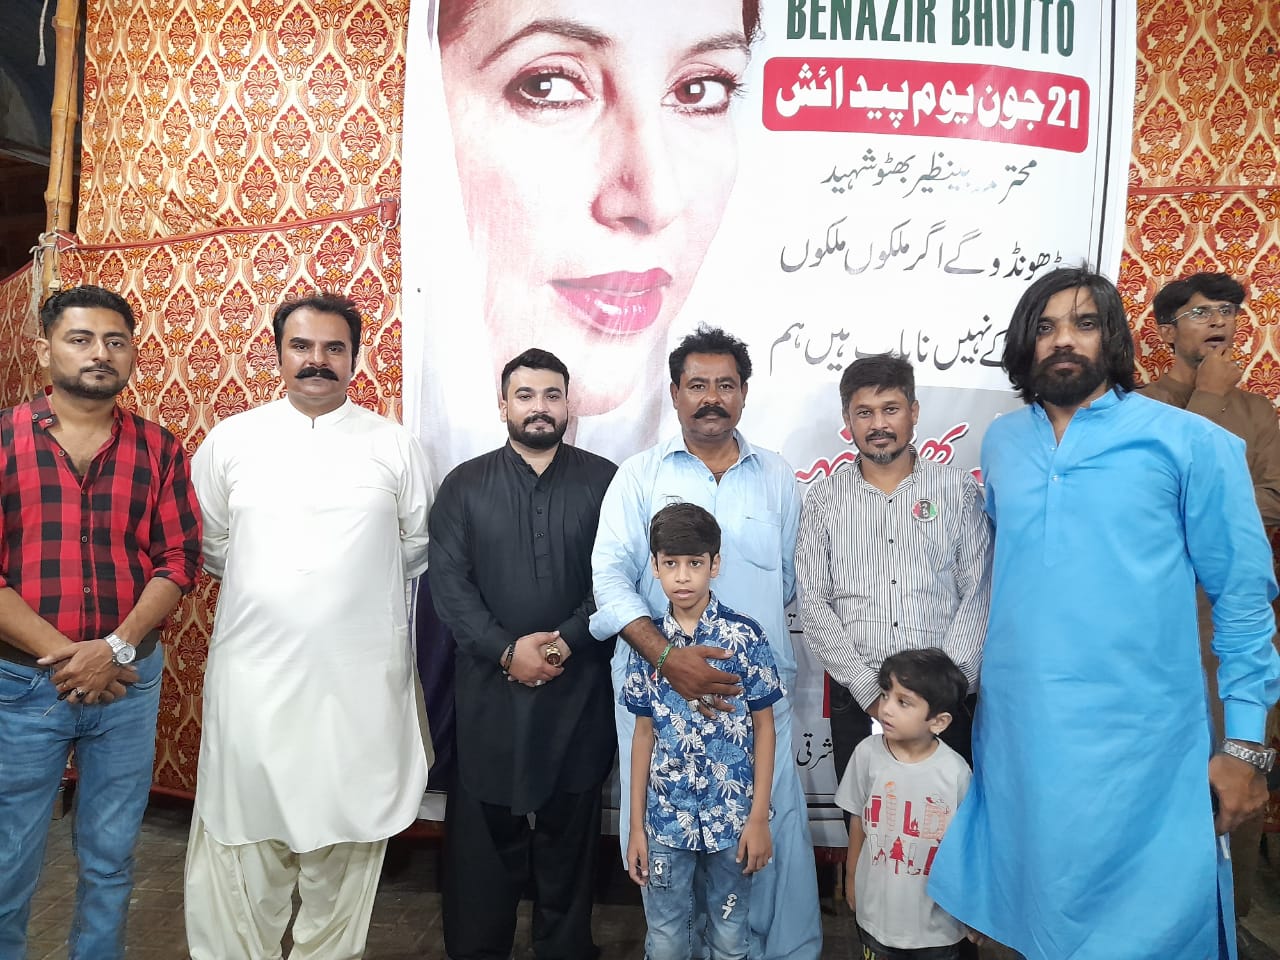  Pakistan peoples party
PS 103 ward 5
Happy birthday Alot mohtarma benazir Bhutto shaheed 